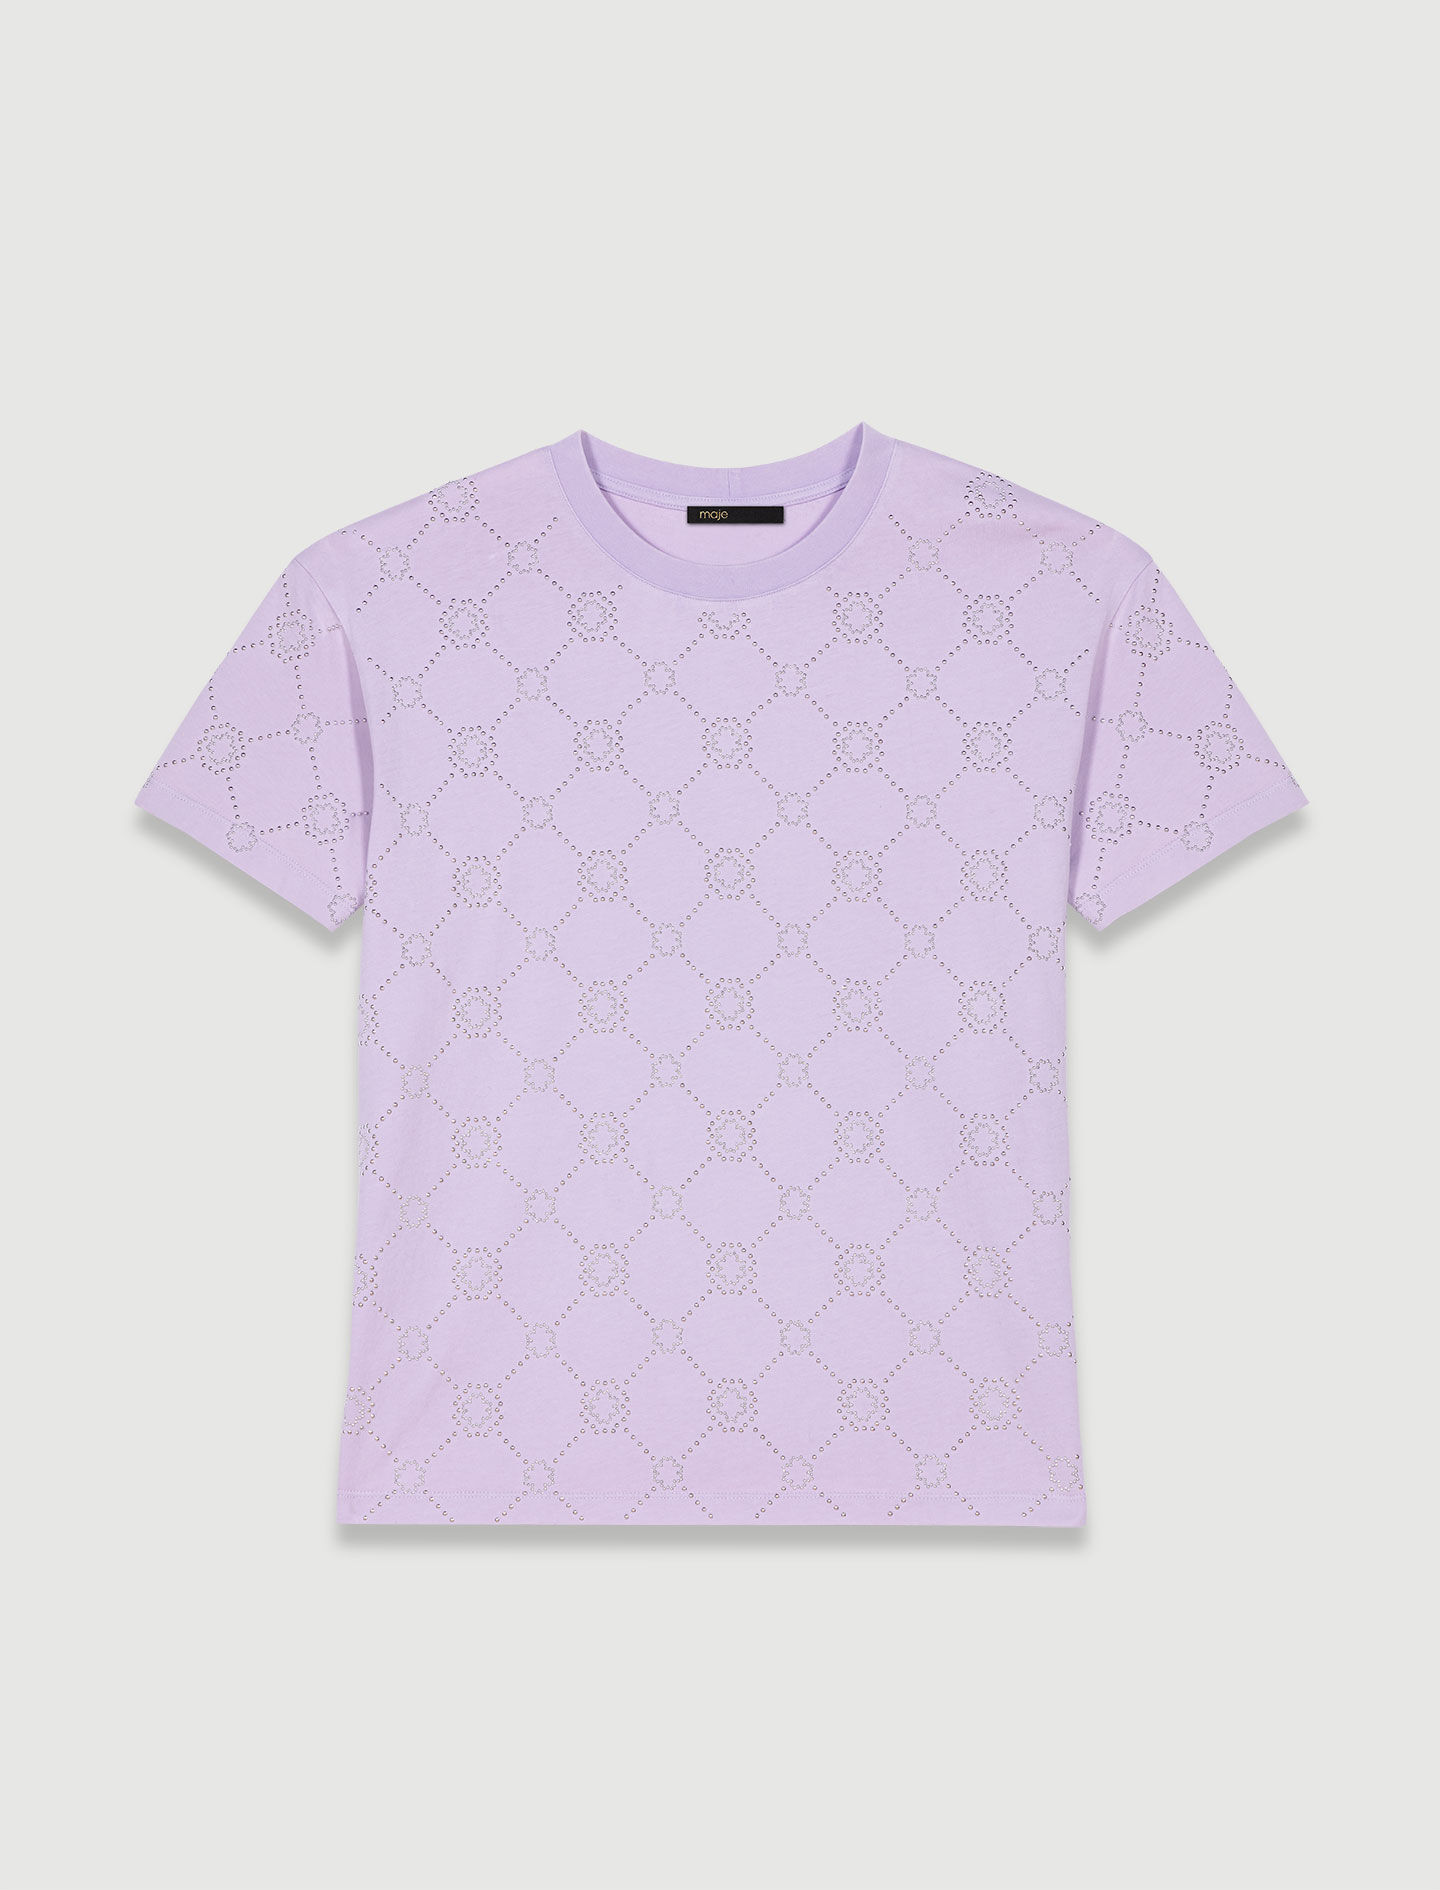 SALE Shirt 【TTTOFH】Studs Lサイズ drshrink.nz Shirt Lサイズ トップス